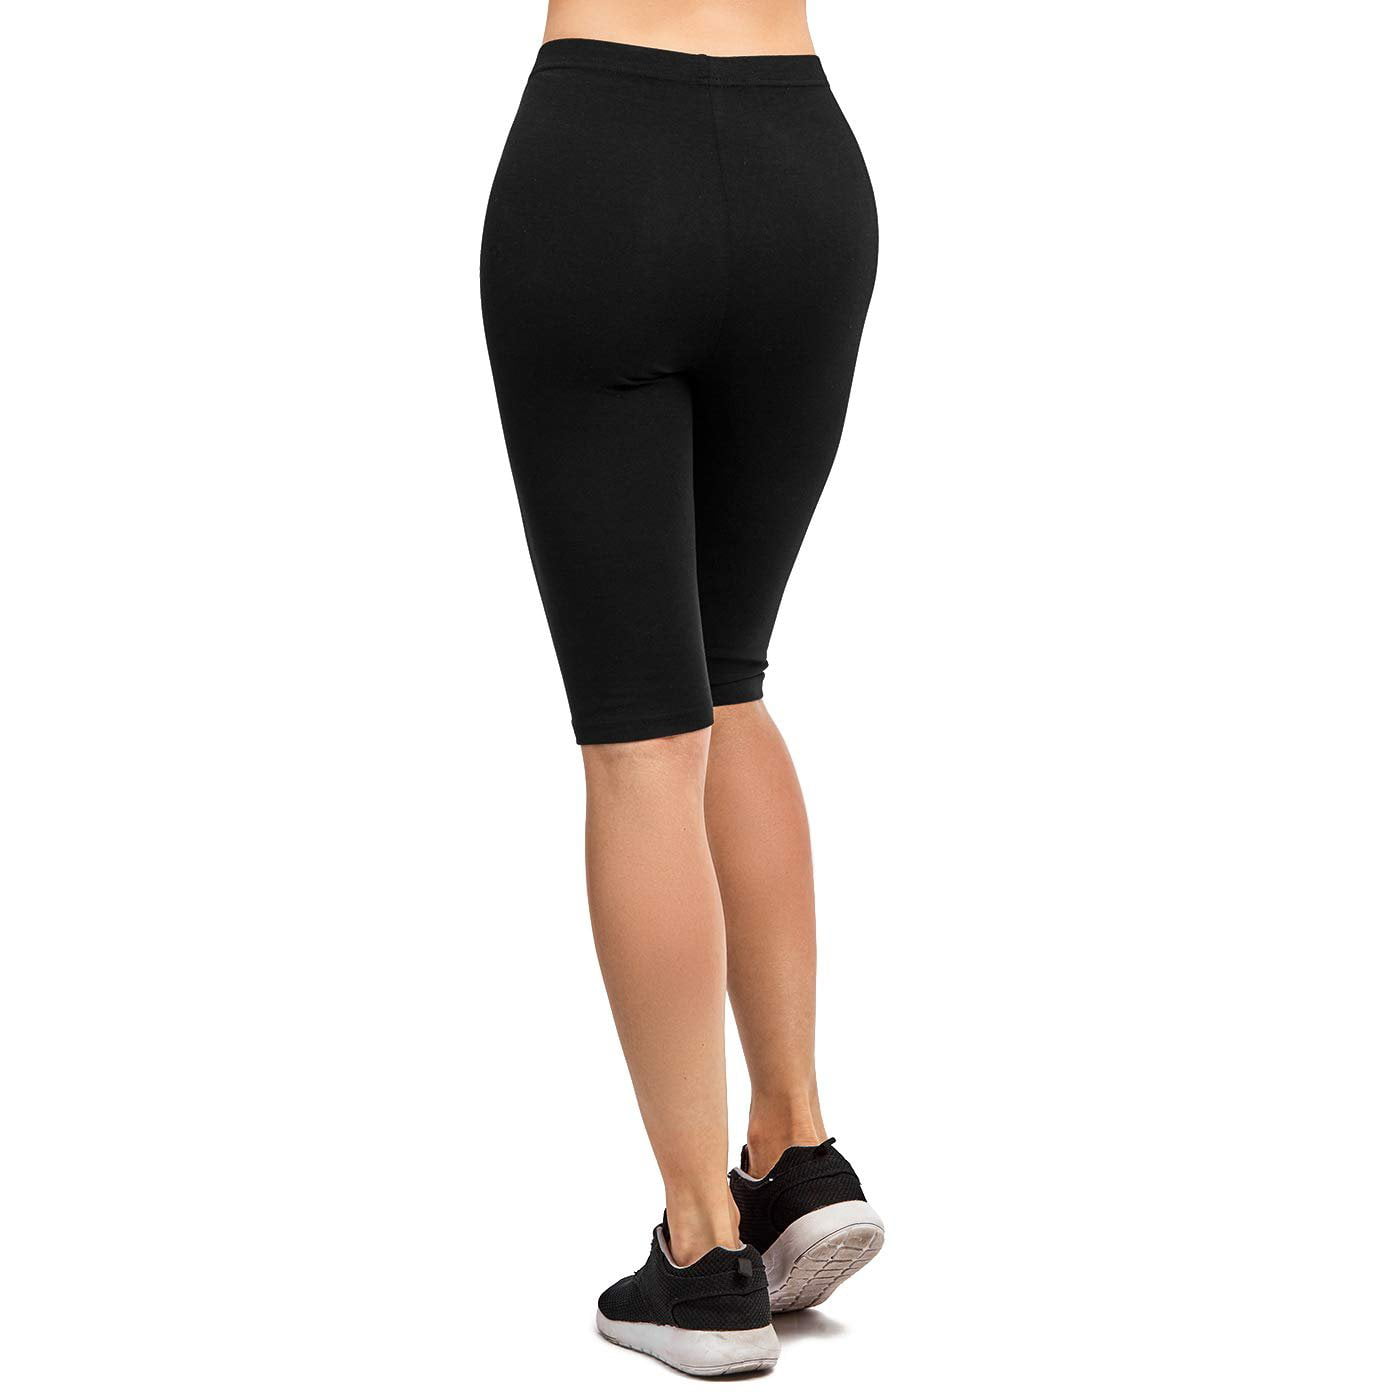 DailyWear Womens Solid Knee Length Short Yoga Cotton Leggings Navy, Medium  